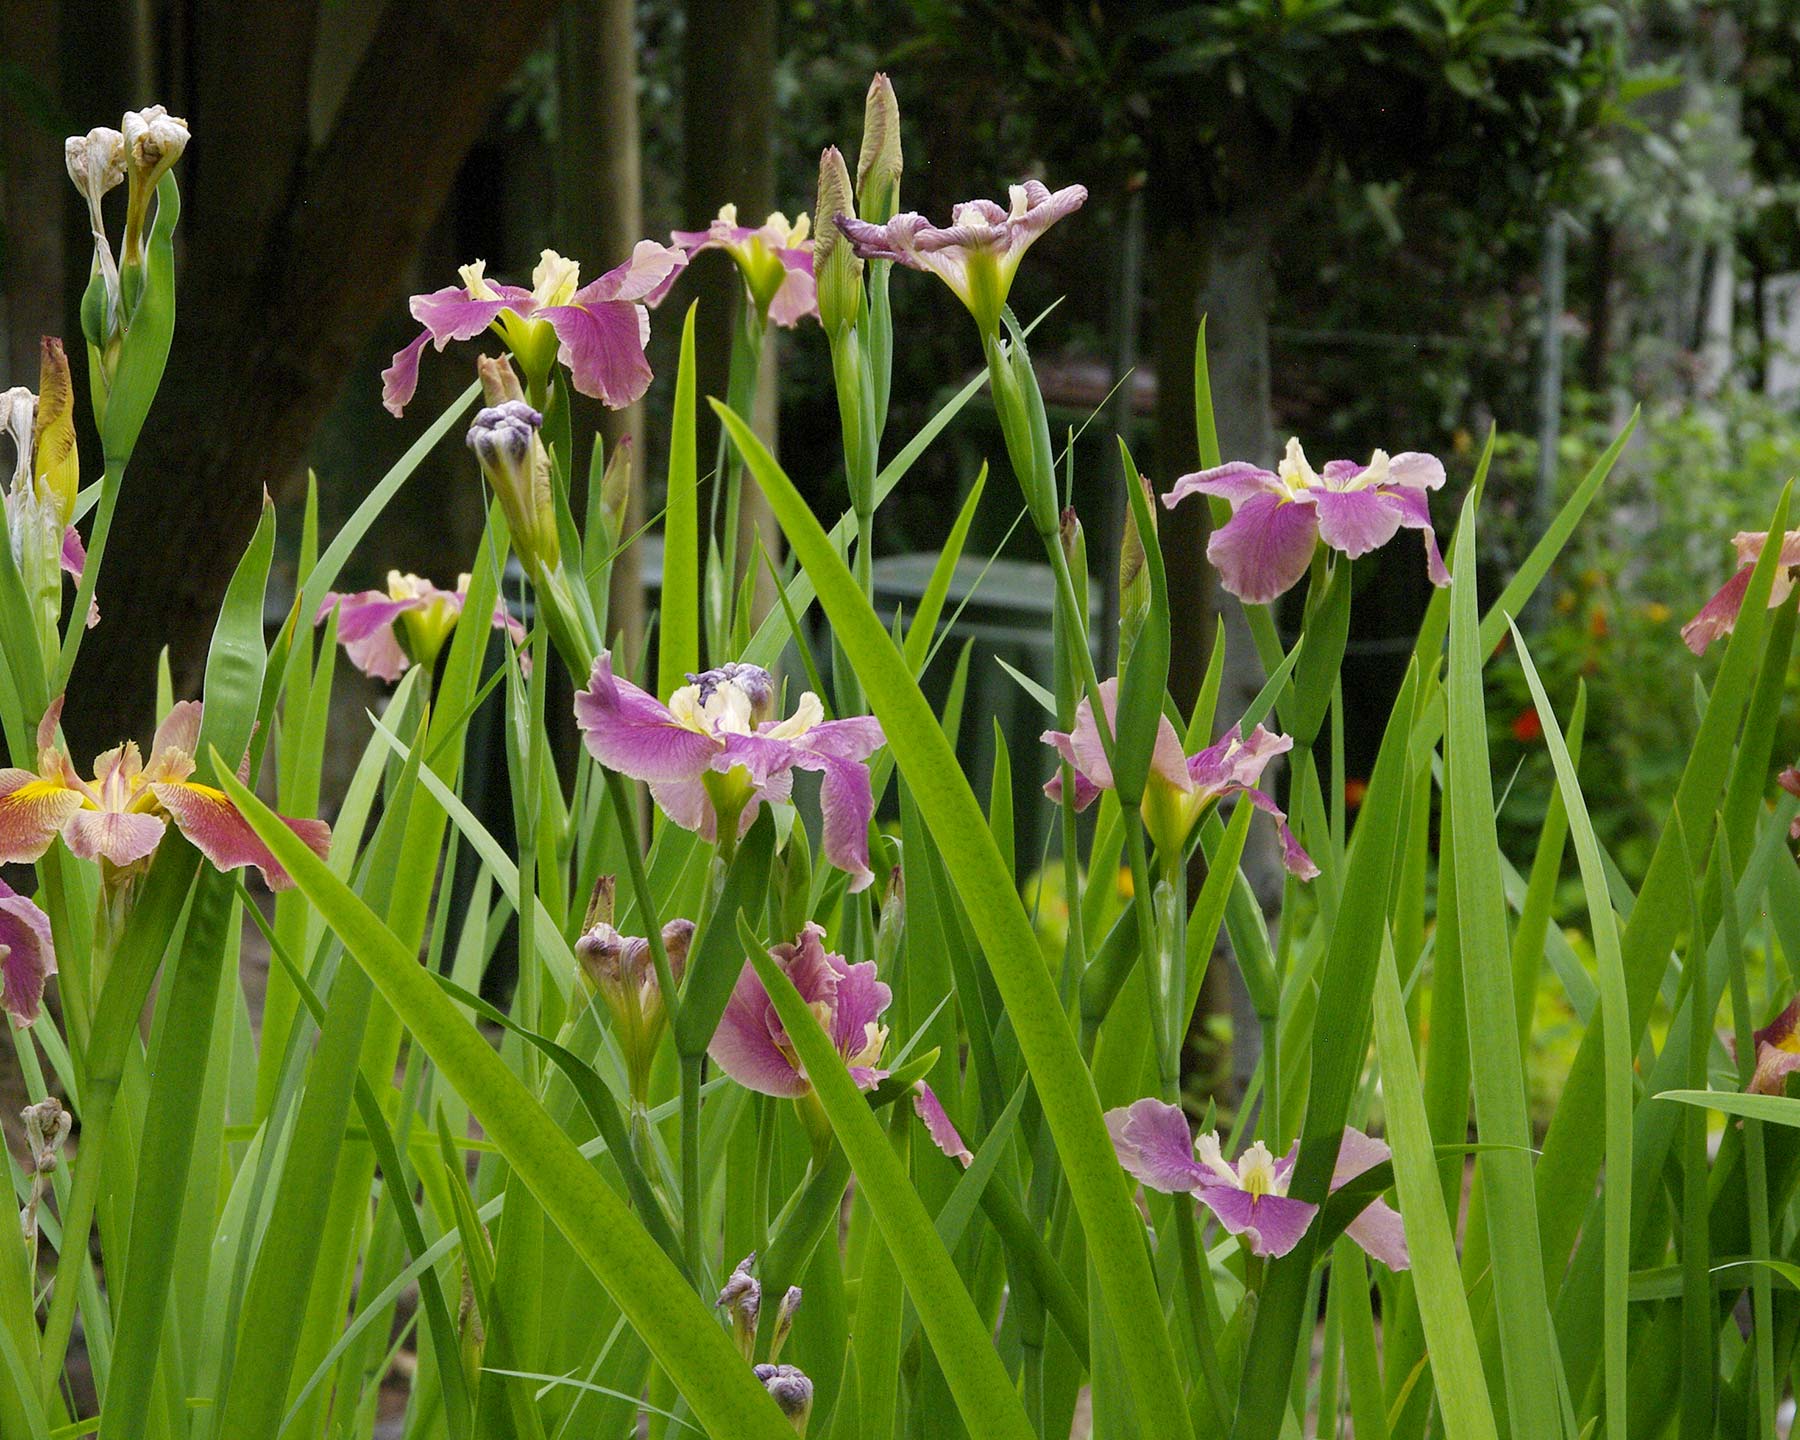 Iris Louisana hybrids - grow well around water features